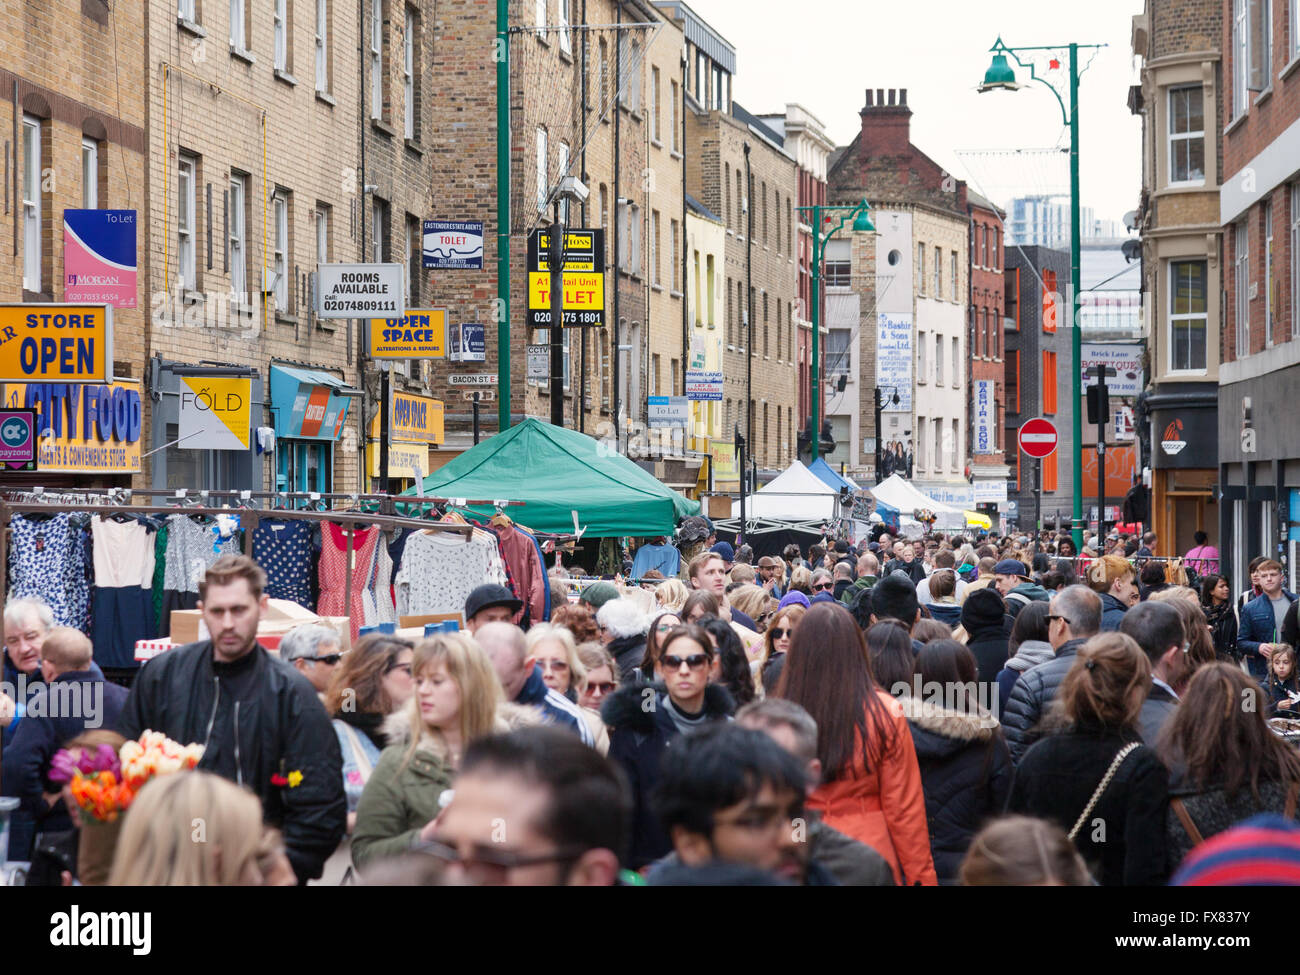 Crowds of people at the street market, Brick Lane, Spitalfields, London East End UK Stock Photo